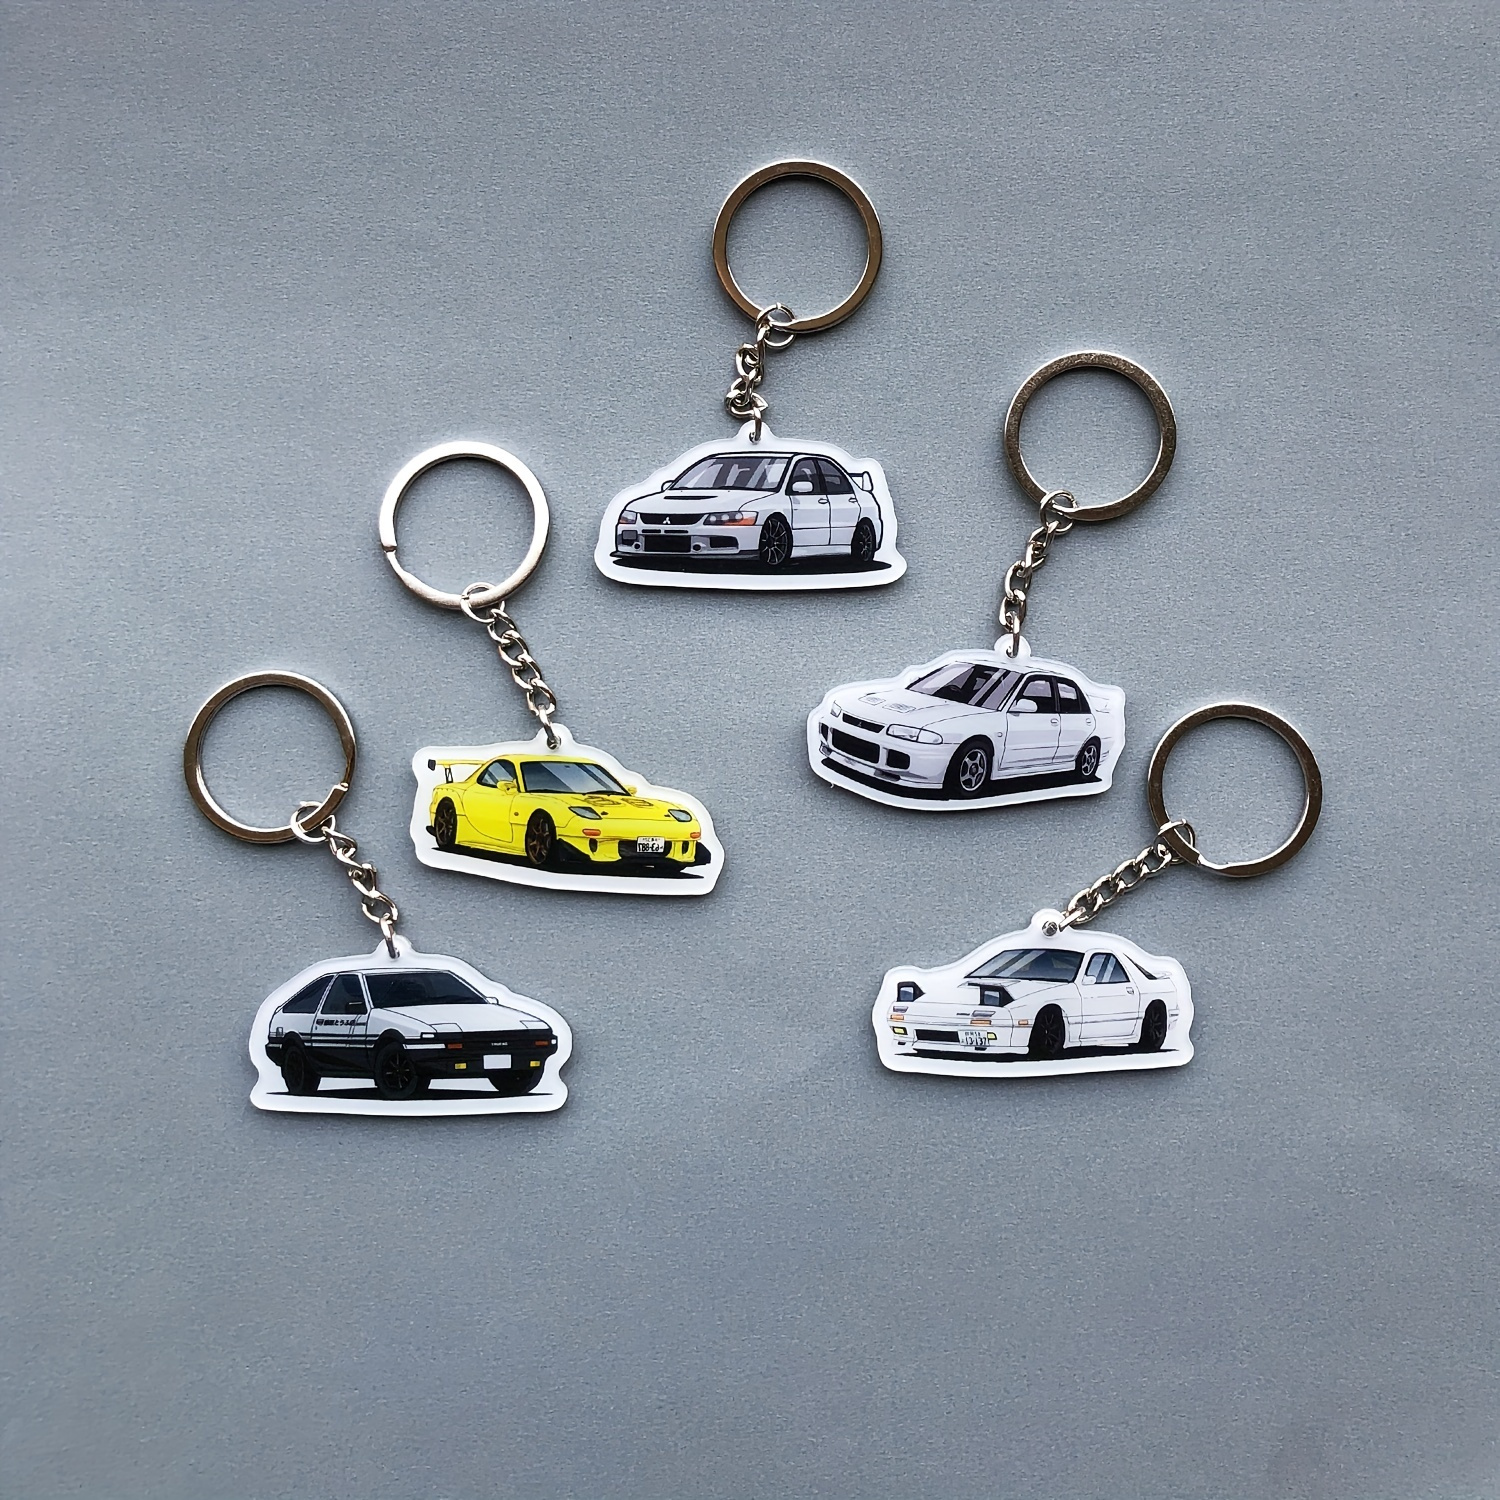 Racecar Tire Keychain - Car Guys Gift - JDM Style